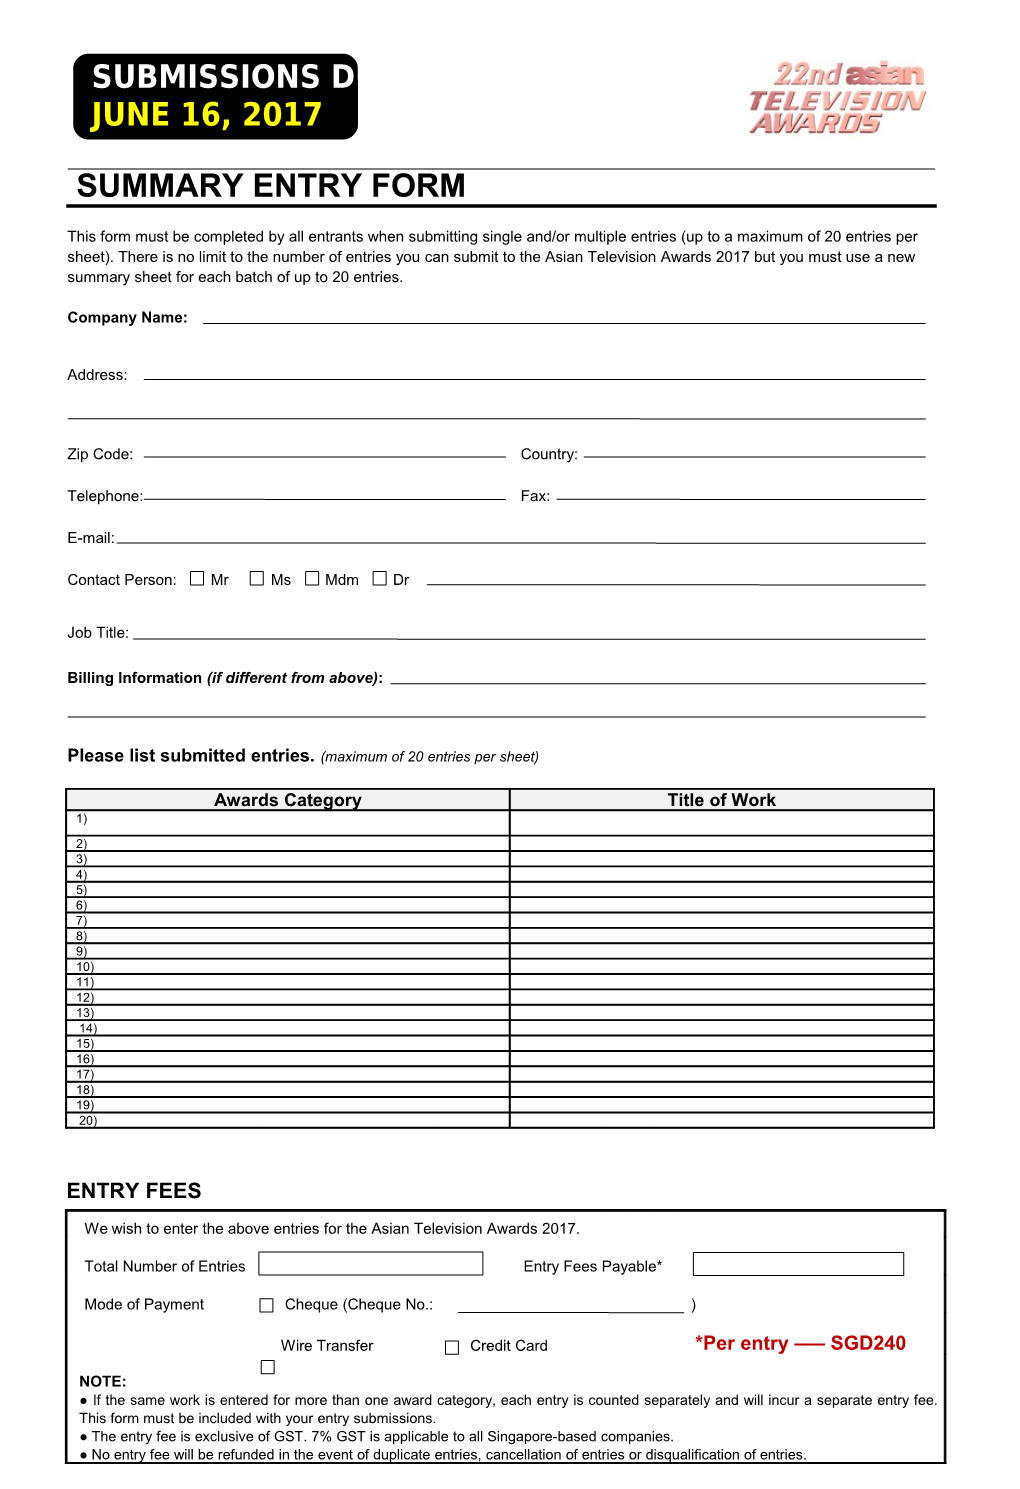 Summary Entry Form s1